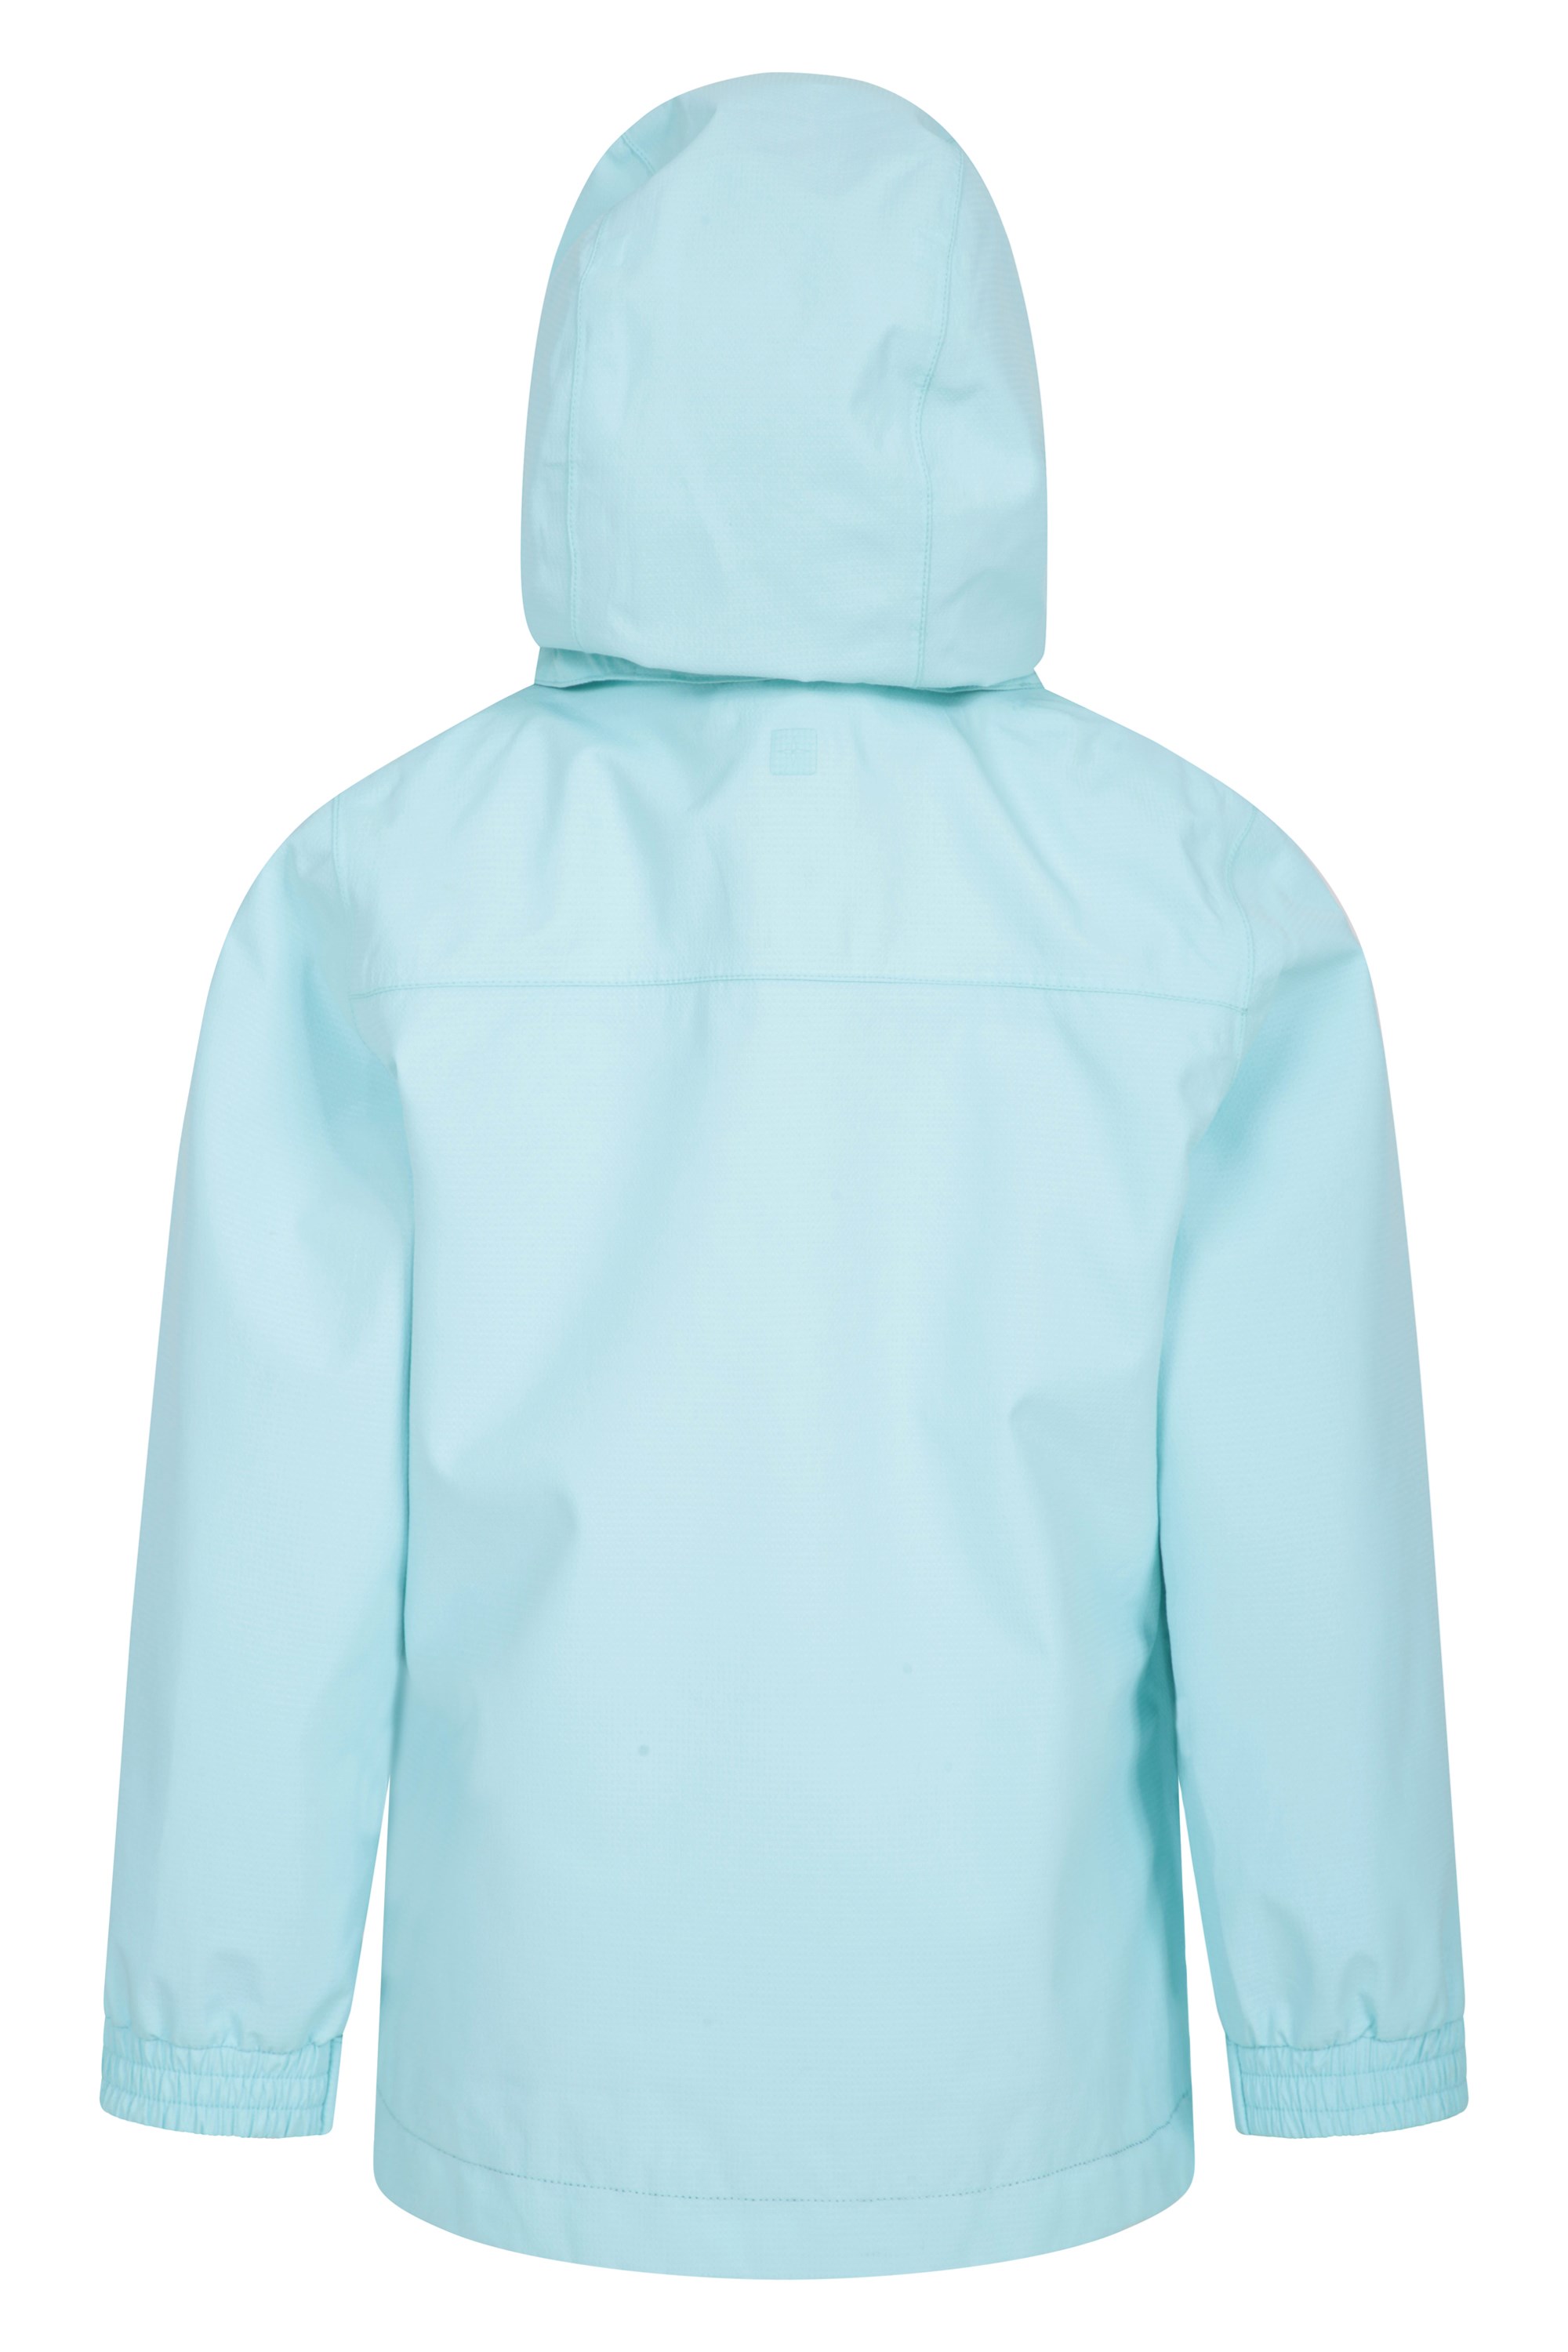 Taped Seams Mountain Warehouse Cloud Burst Kids Waterproof Jacket Zipped Pockets Breathable Detachable Hood